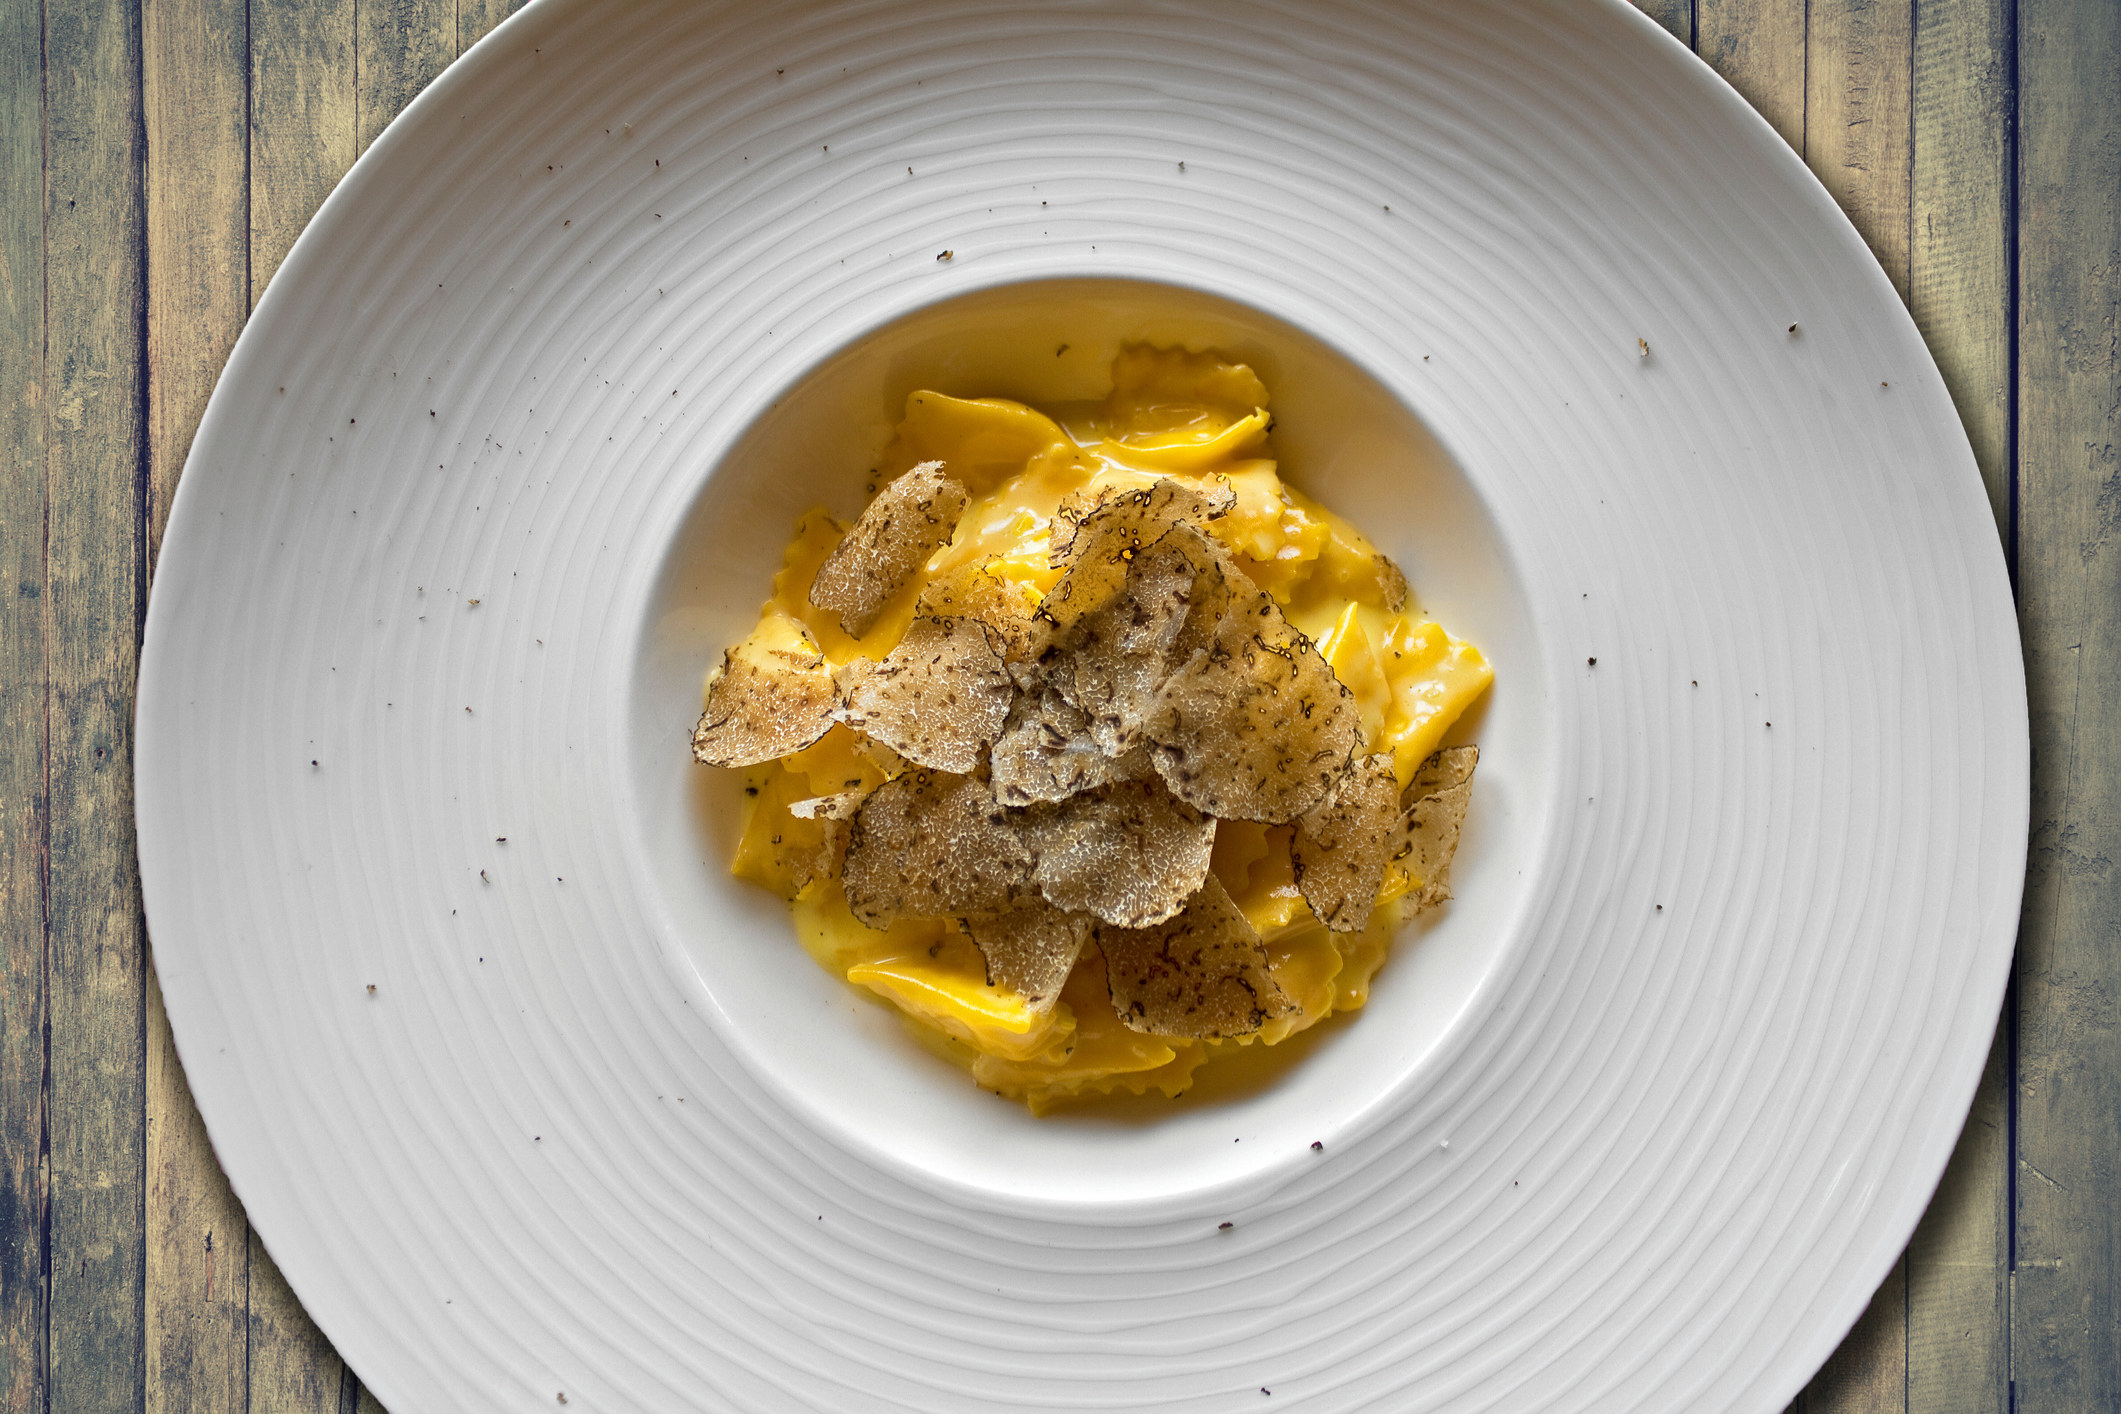 Ravioli pasta dish with cheese sauce and black truffles